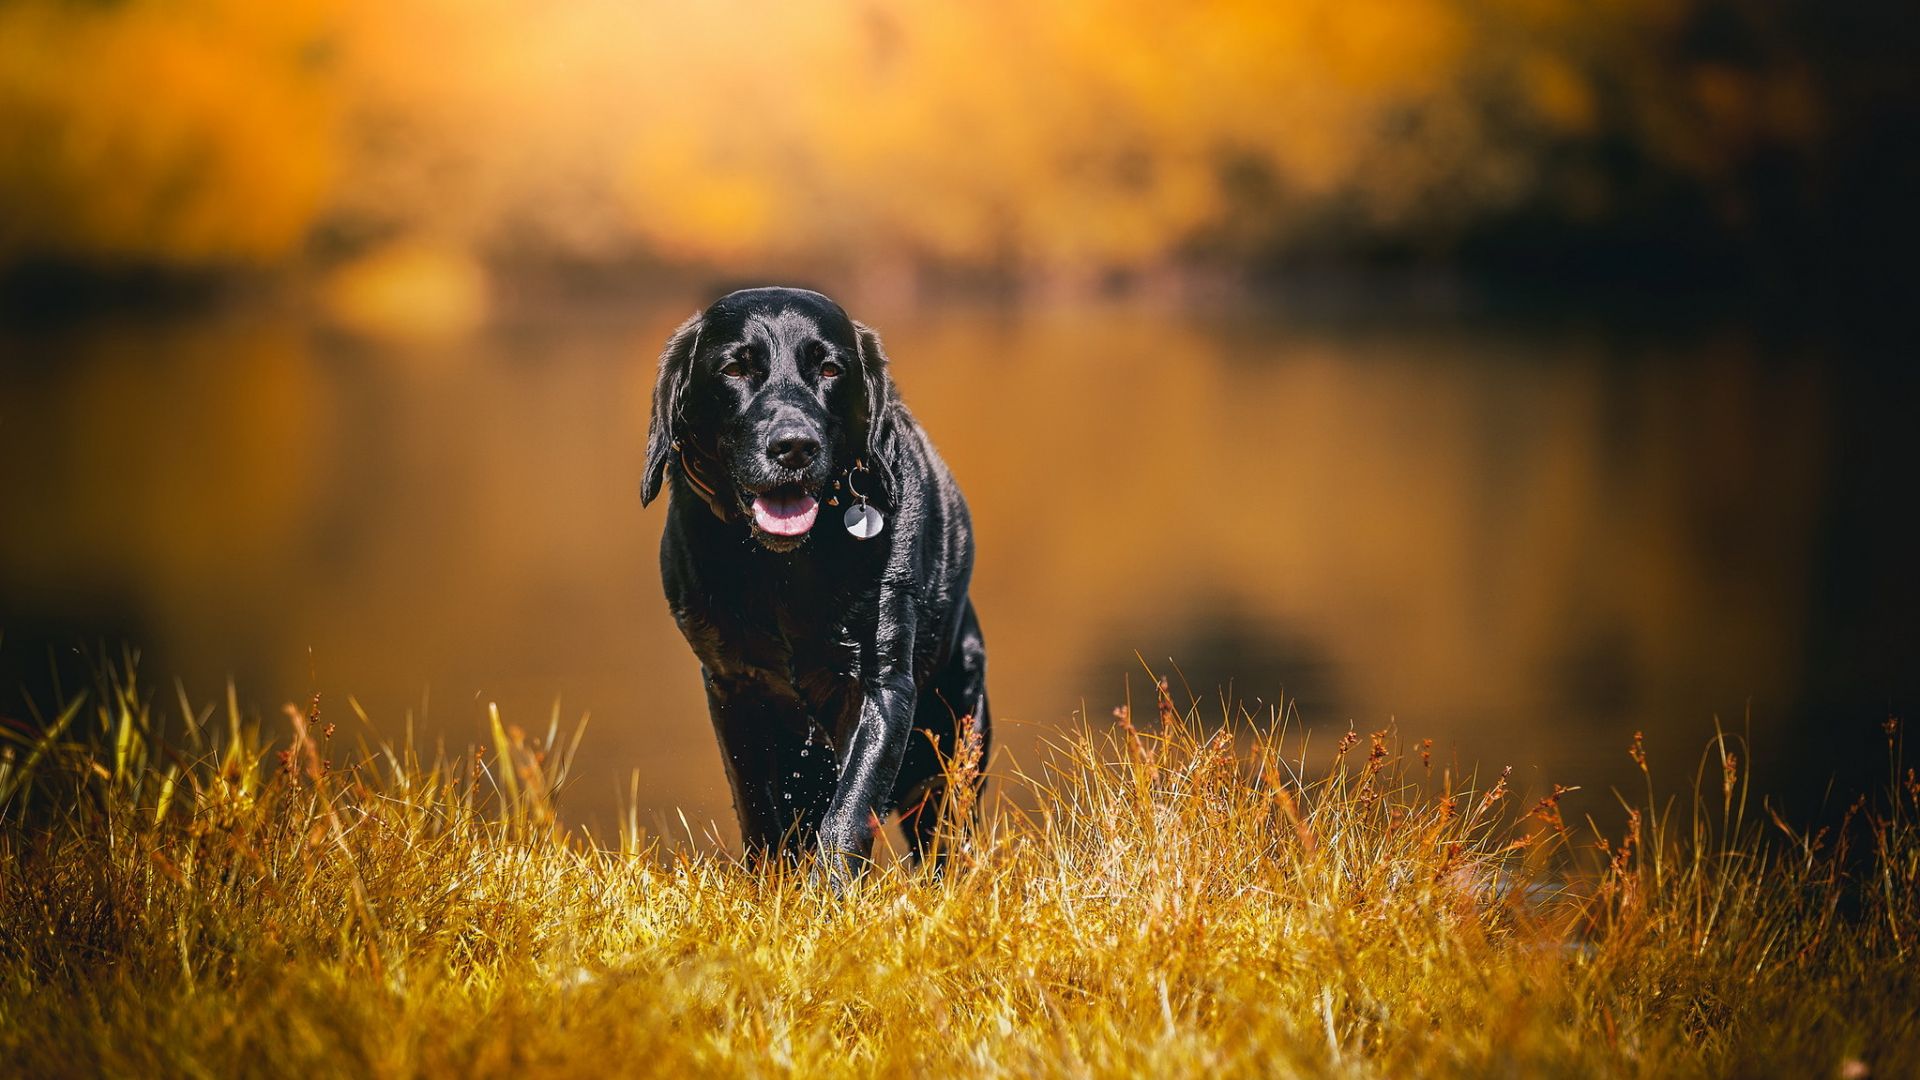 Desktop Wallpaper Labrador, Black Dog, Pet, Walk, Grass, Hd Image, Picture,  Background, Tezxt0